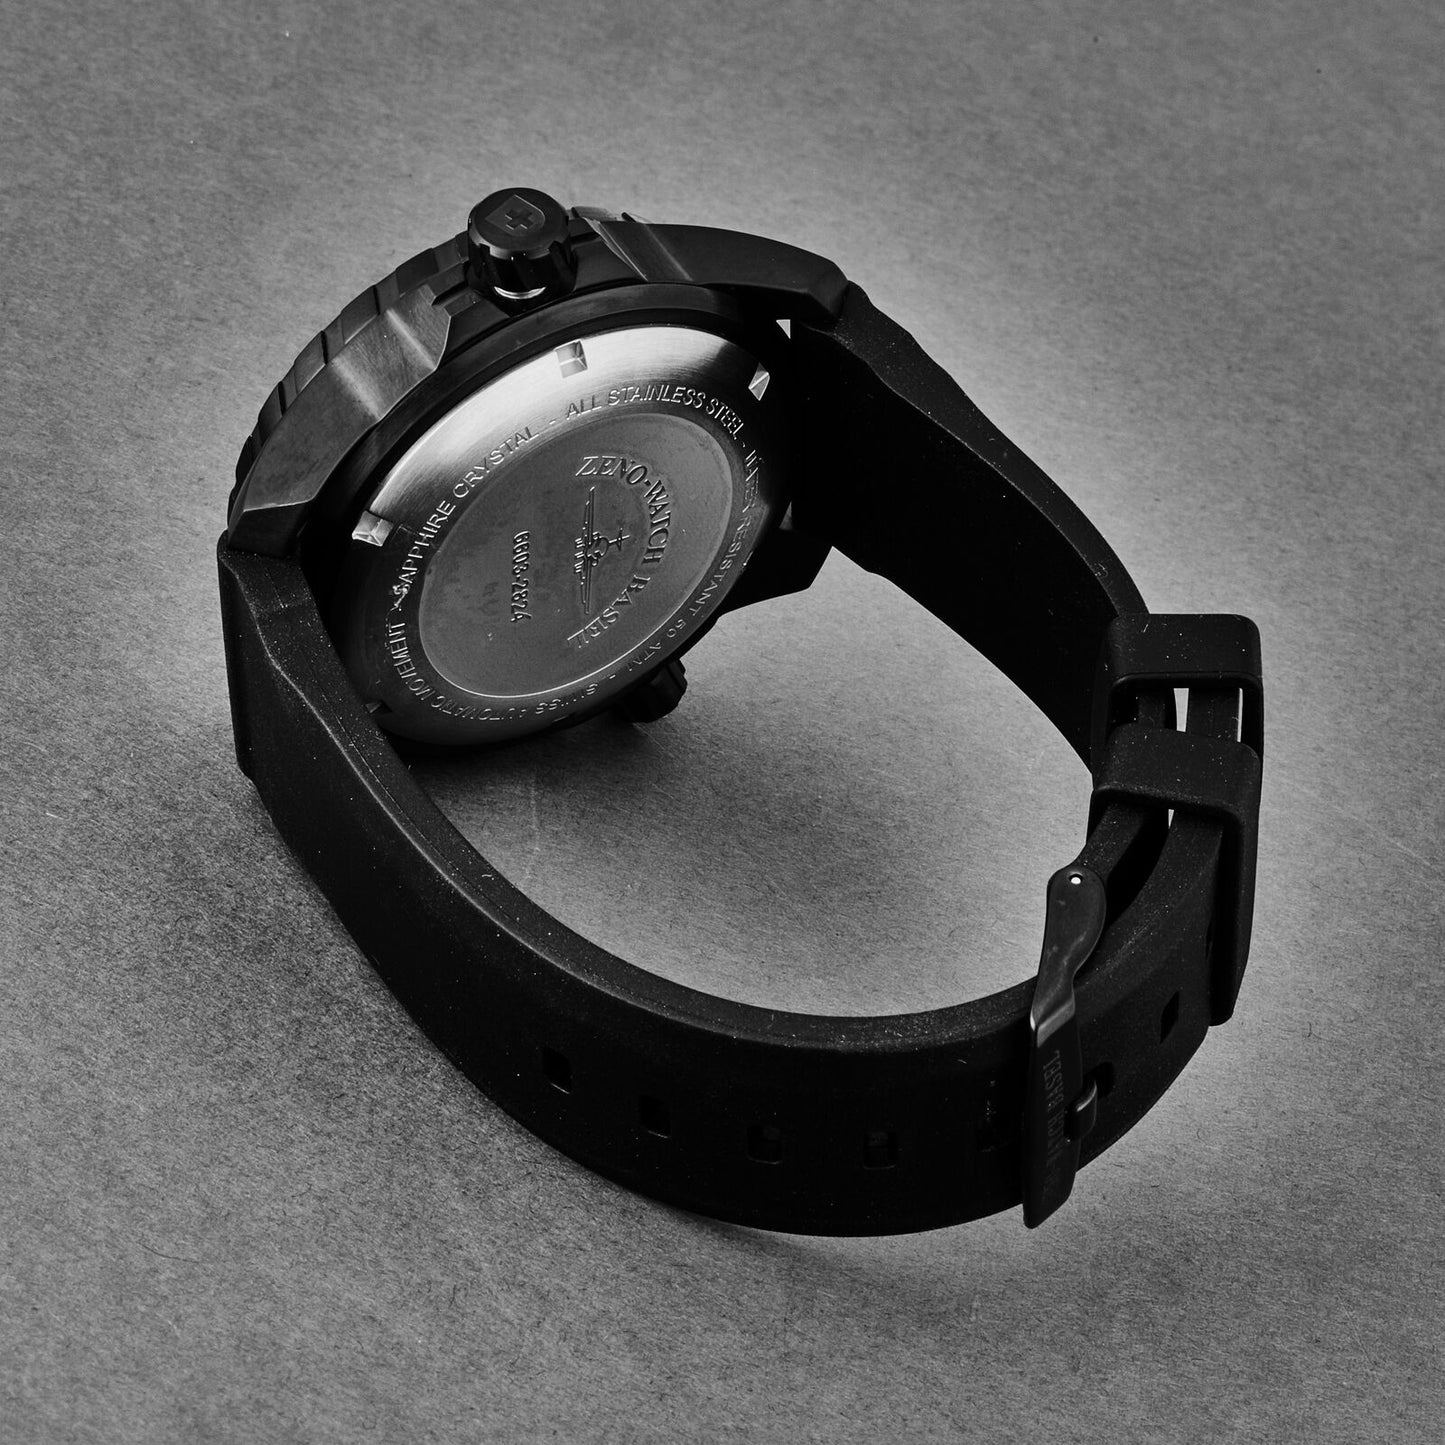 Zeno - Divers, Orange Dial Black Rubber Strap Men's Automatic Watch - 6603-BK-A5